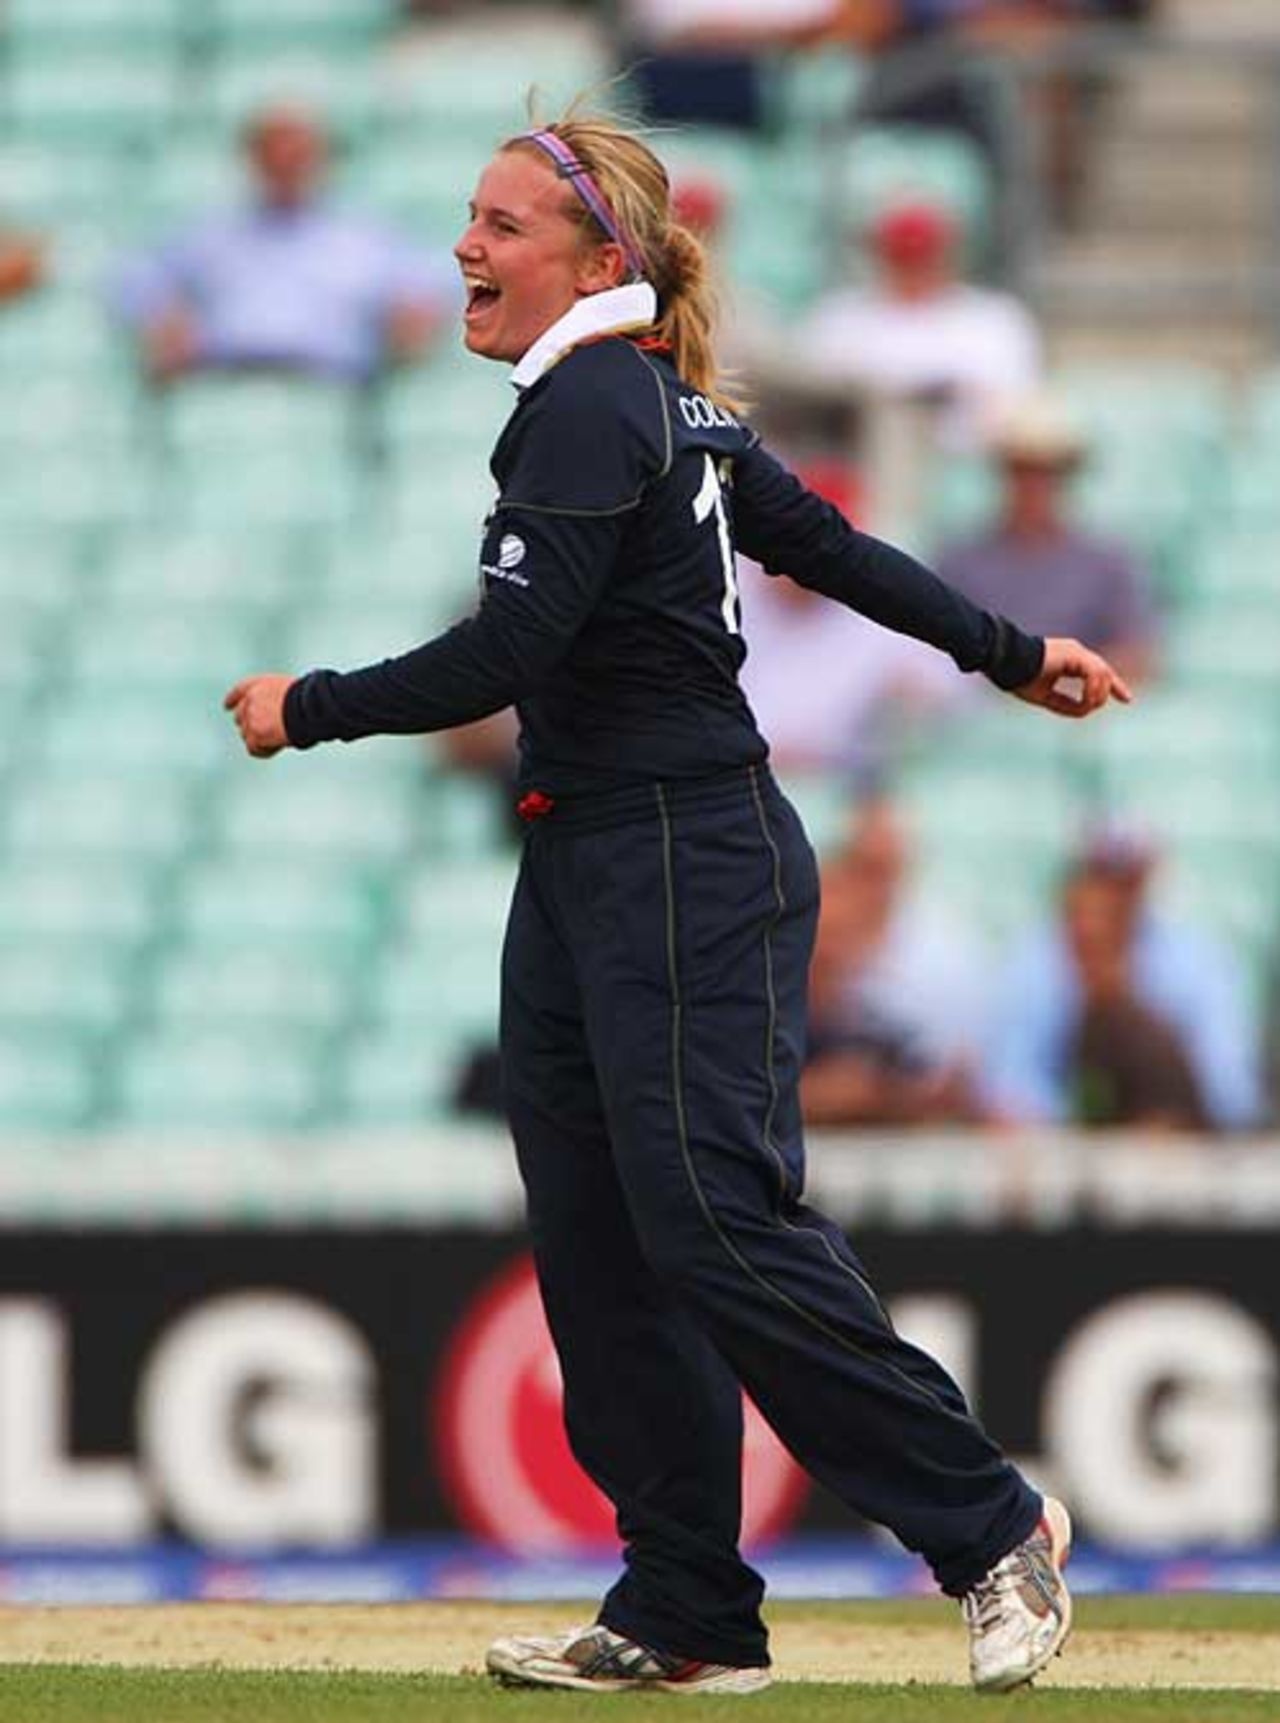 A jubilant Holly Colvin after a wicket, 2nd Semi-Final: England Women v Australia Women, ICC Women's World Twenty20, The Oval, June 19, 2009